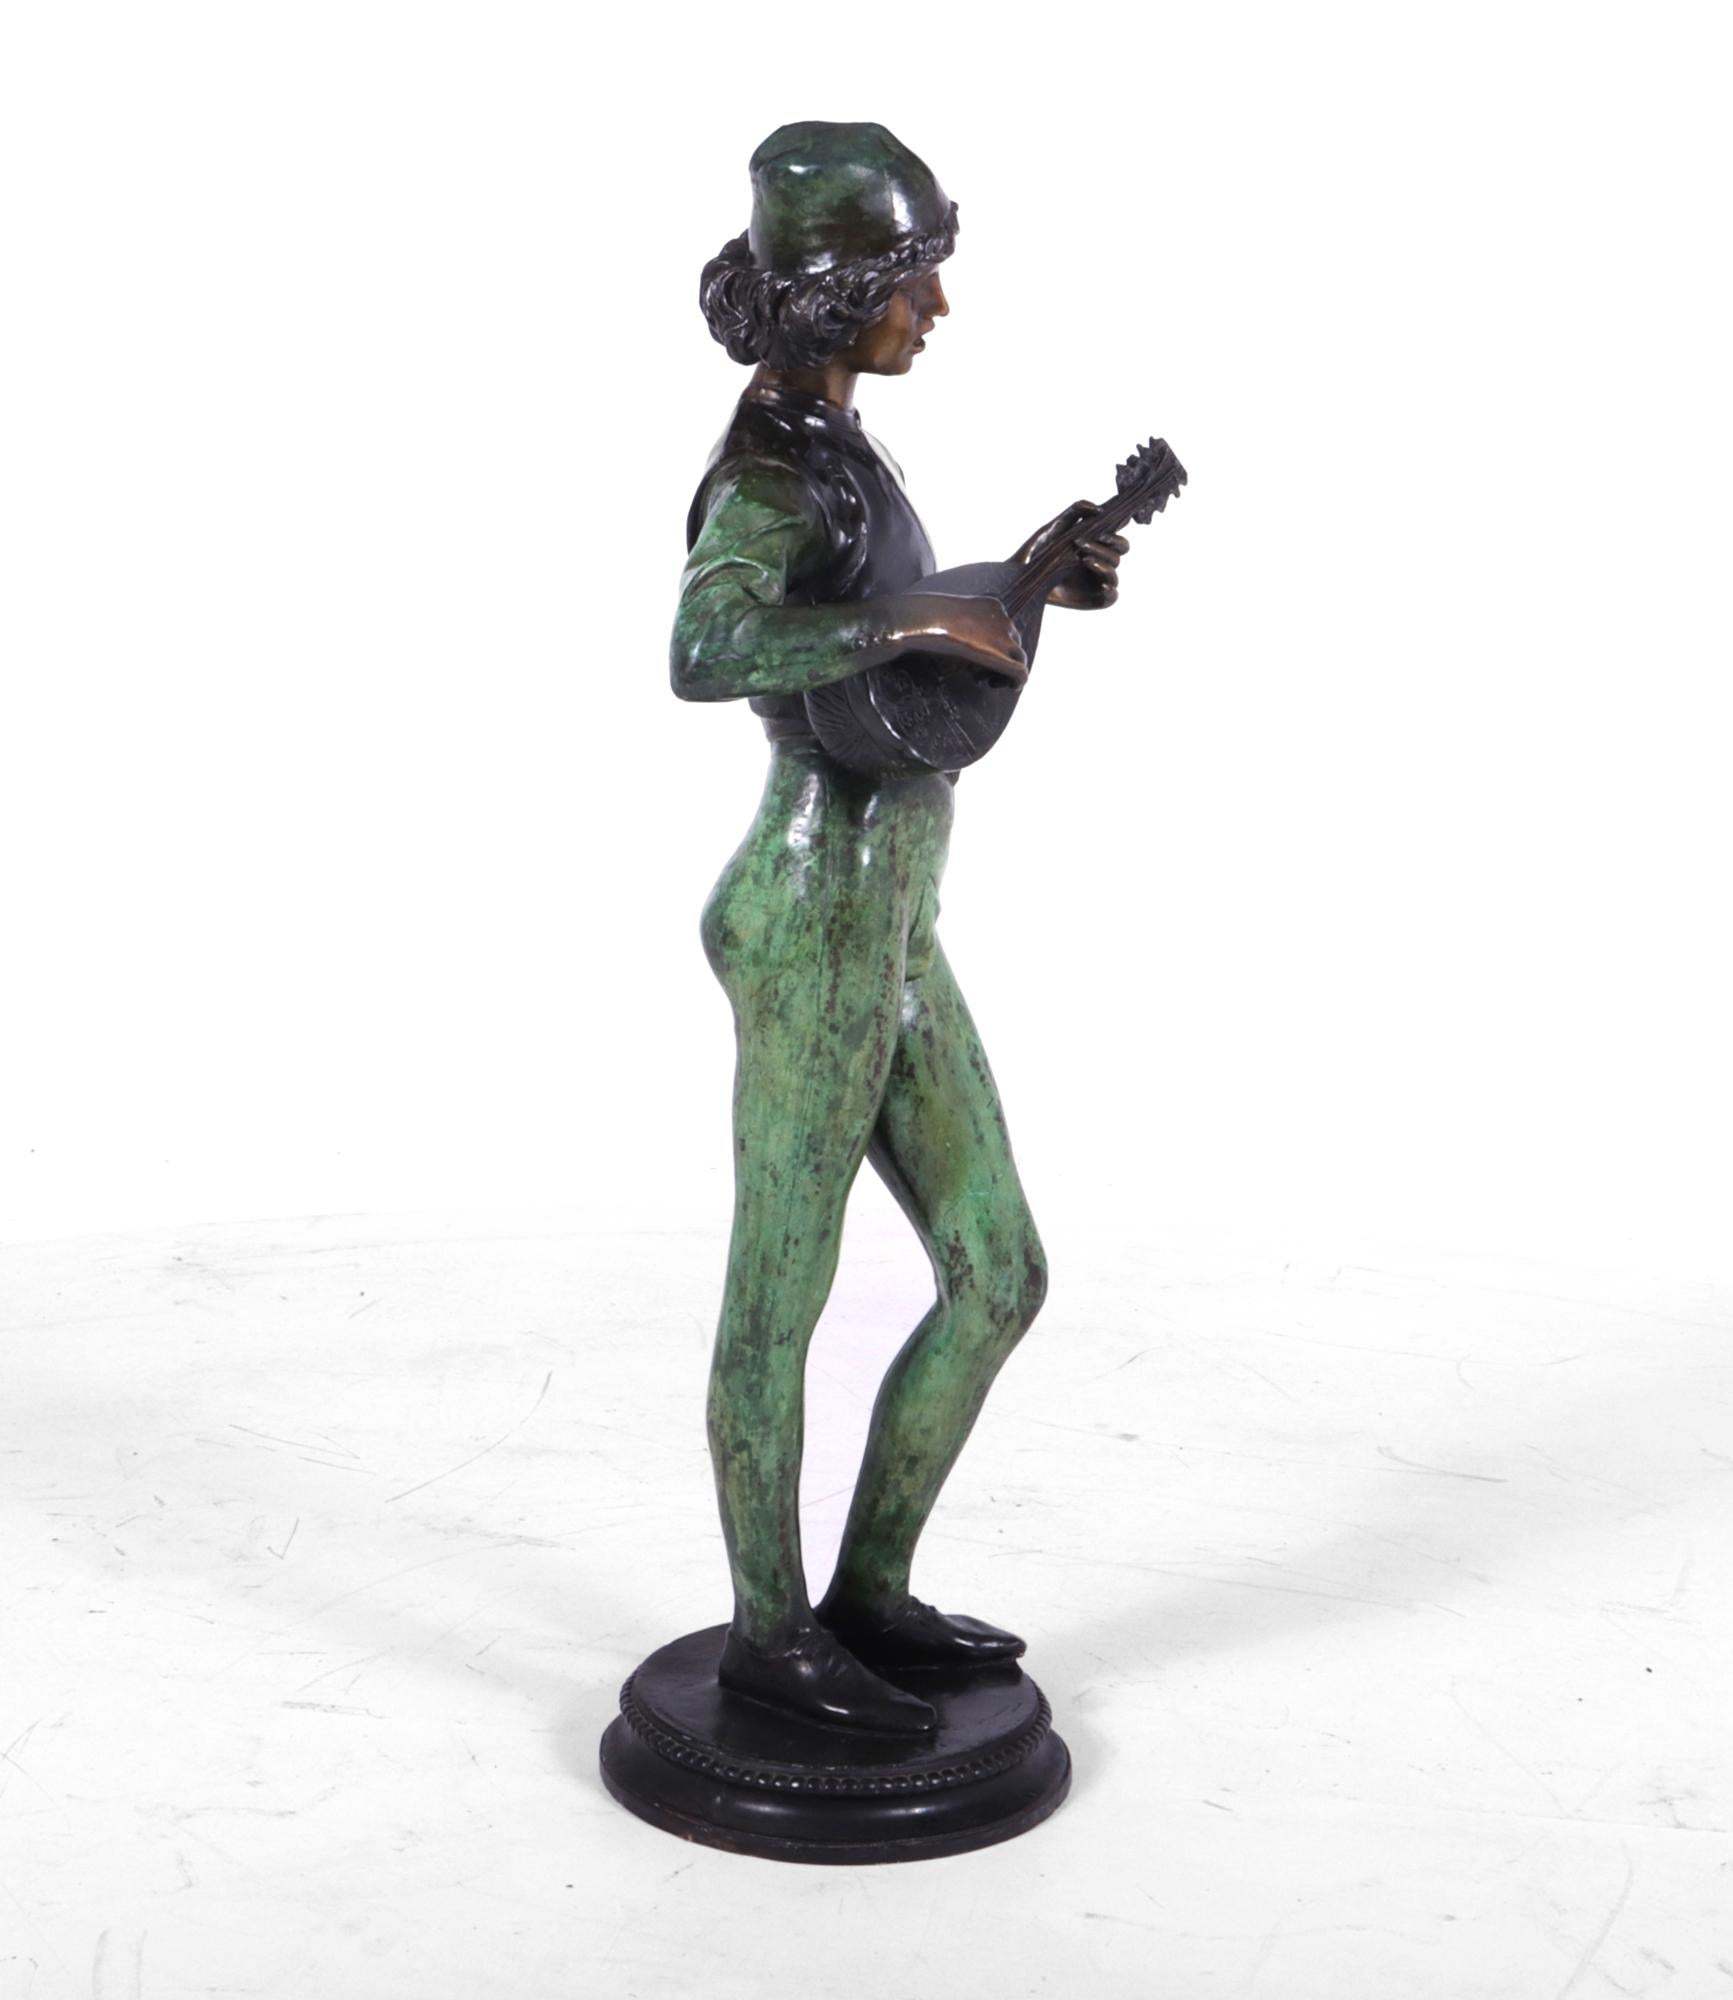 Antique Bronze Sculpture ‘Standing Music Man’ by Barbedienne Fondeur c1880 6